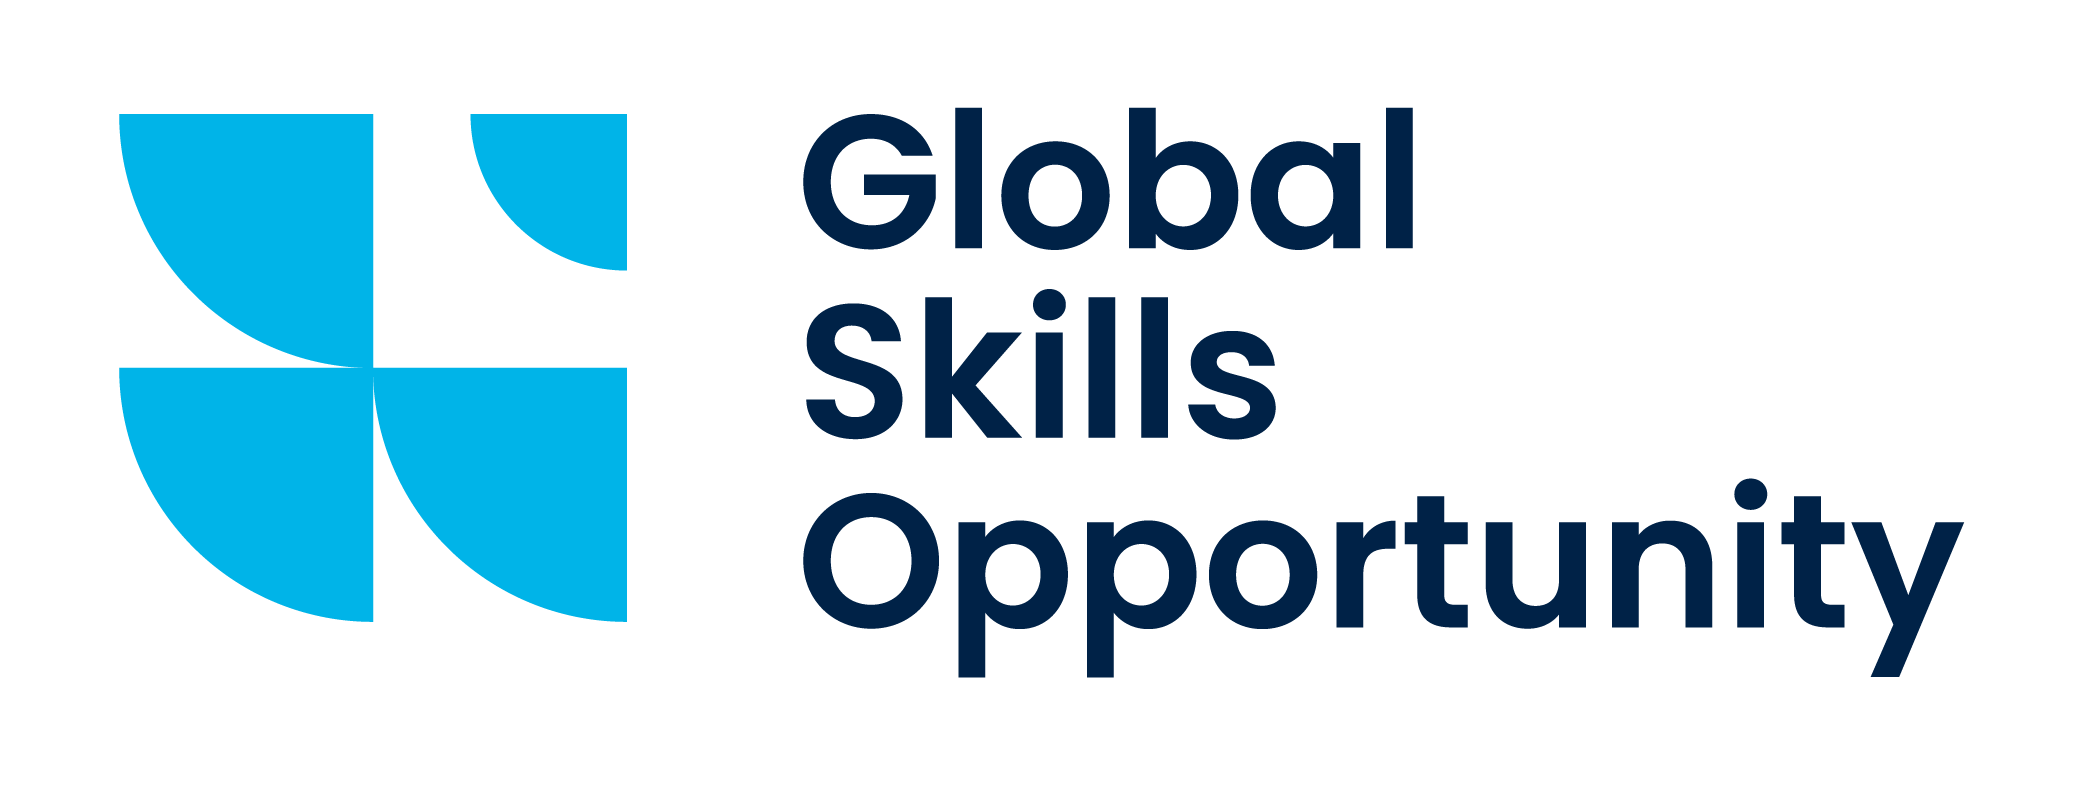 1. Global Skills Opportunity